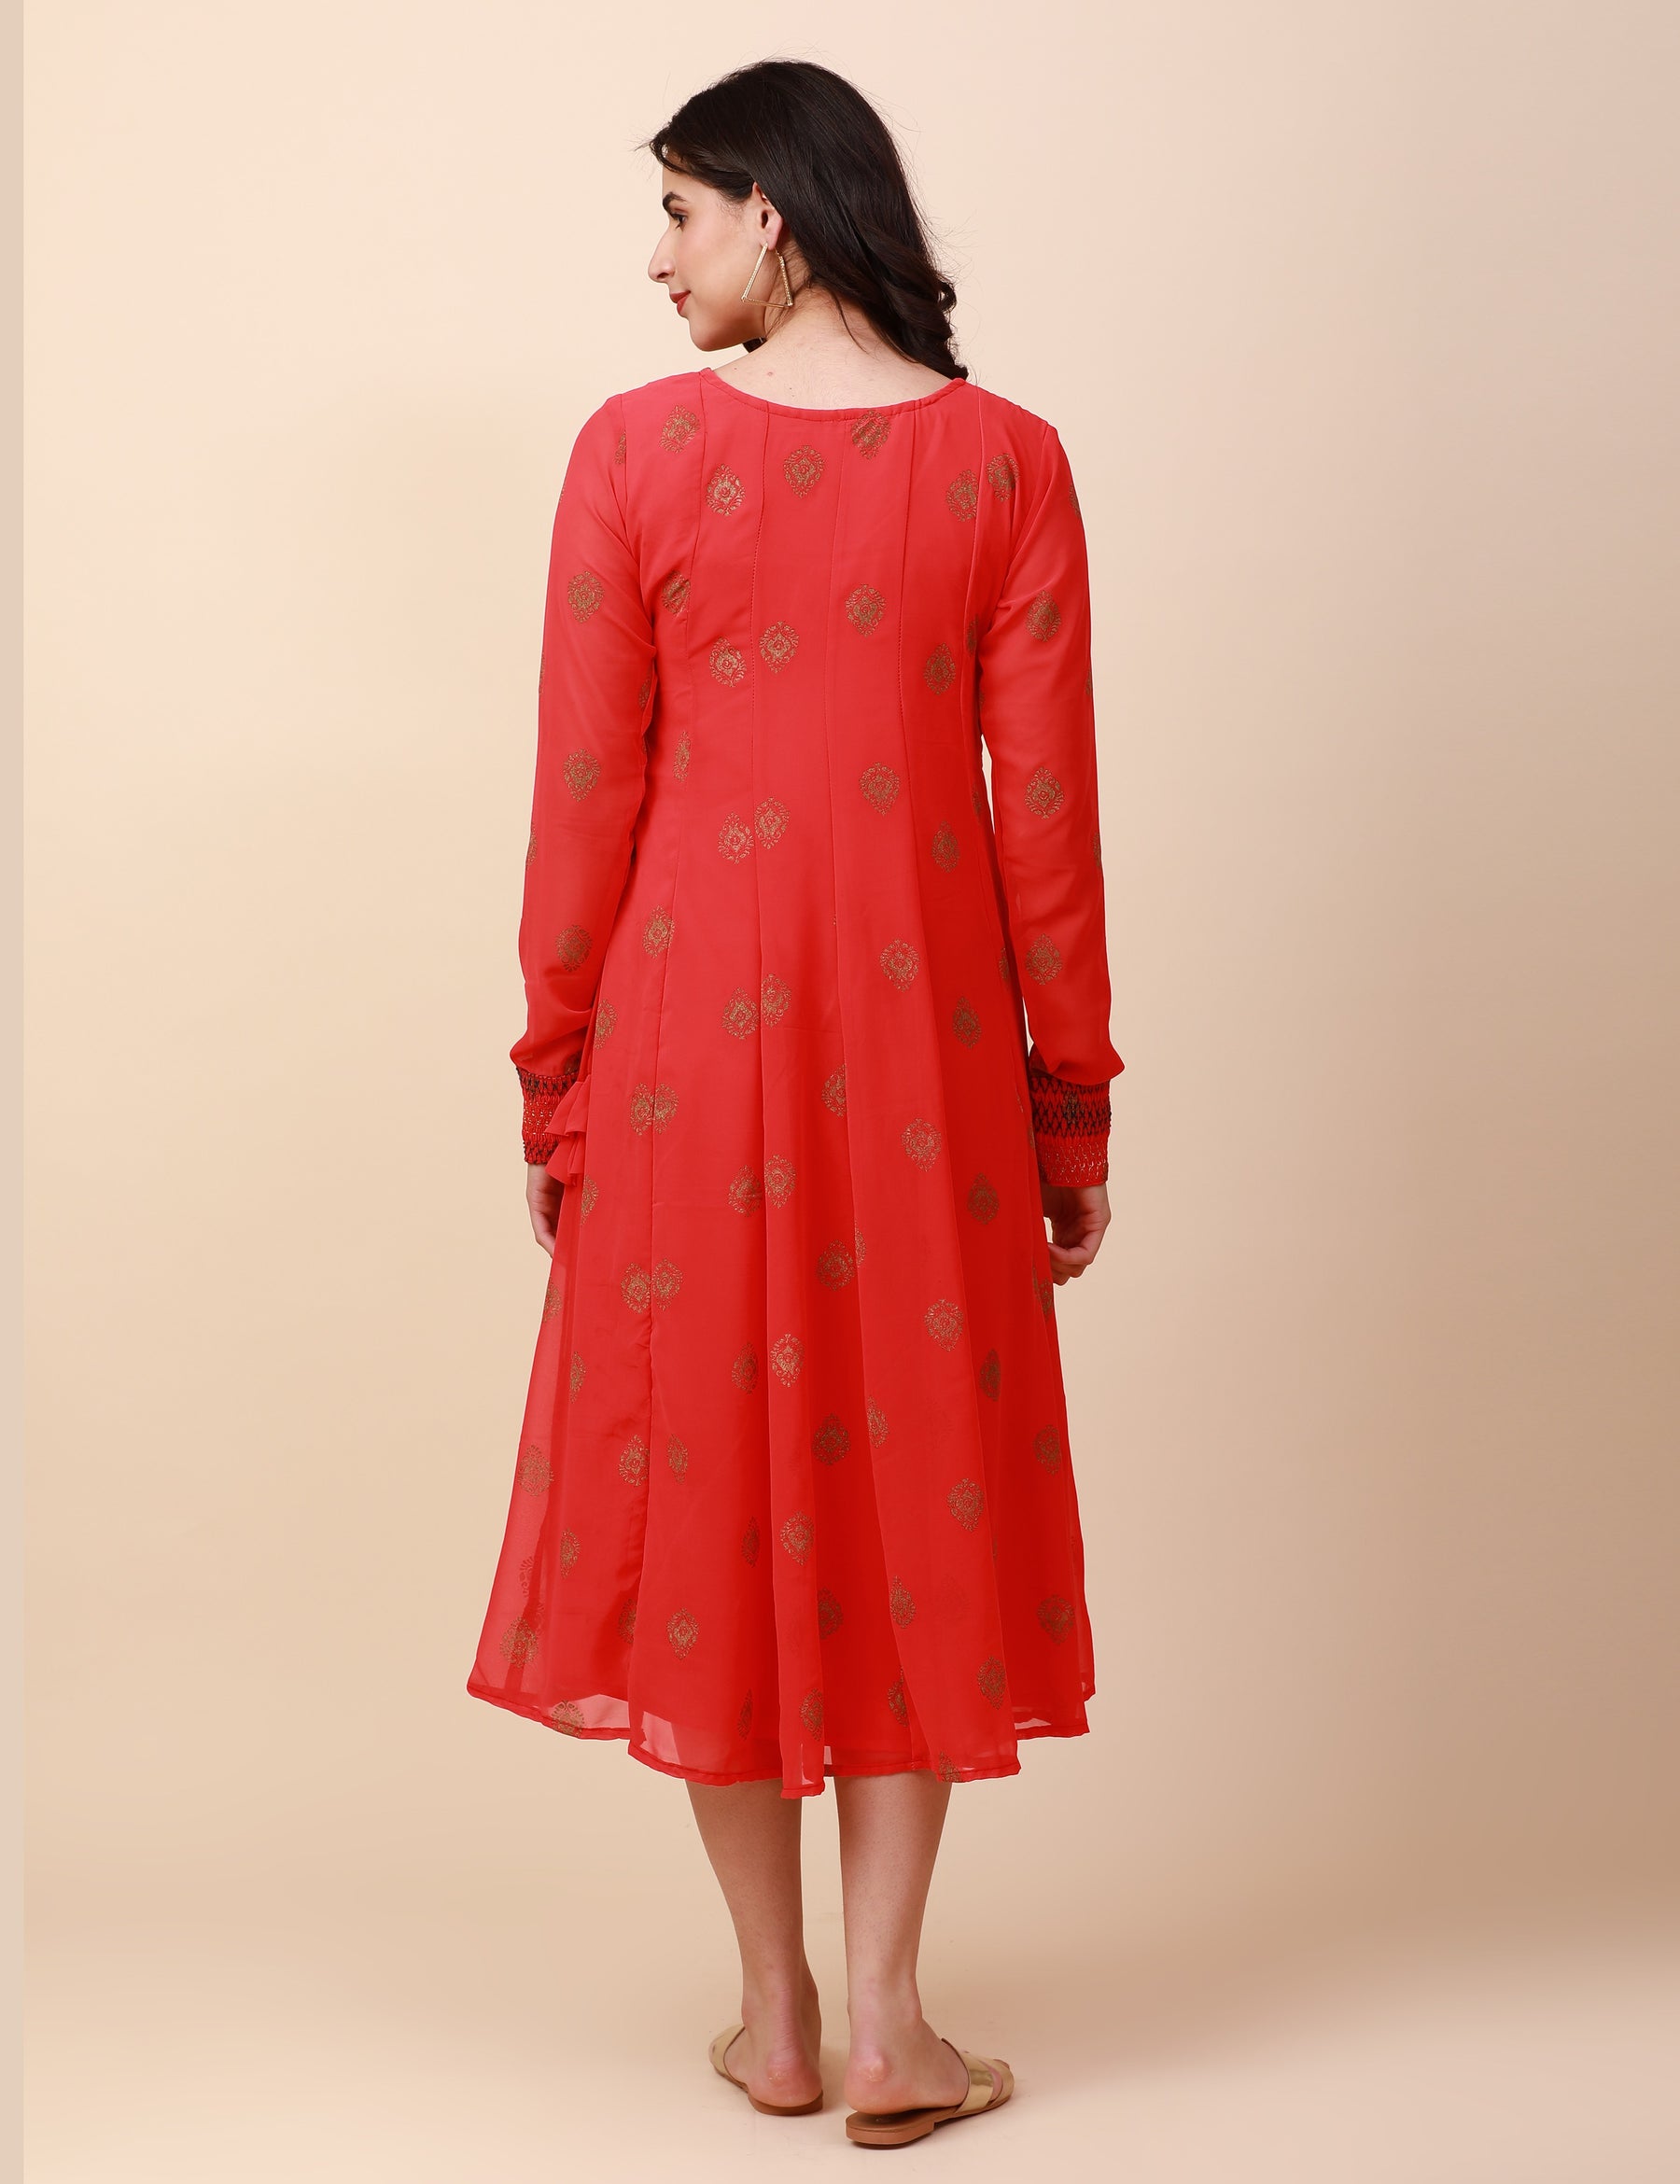 Anarkali Dress With Smoking-Style Overcoat - Raddish Pink